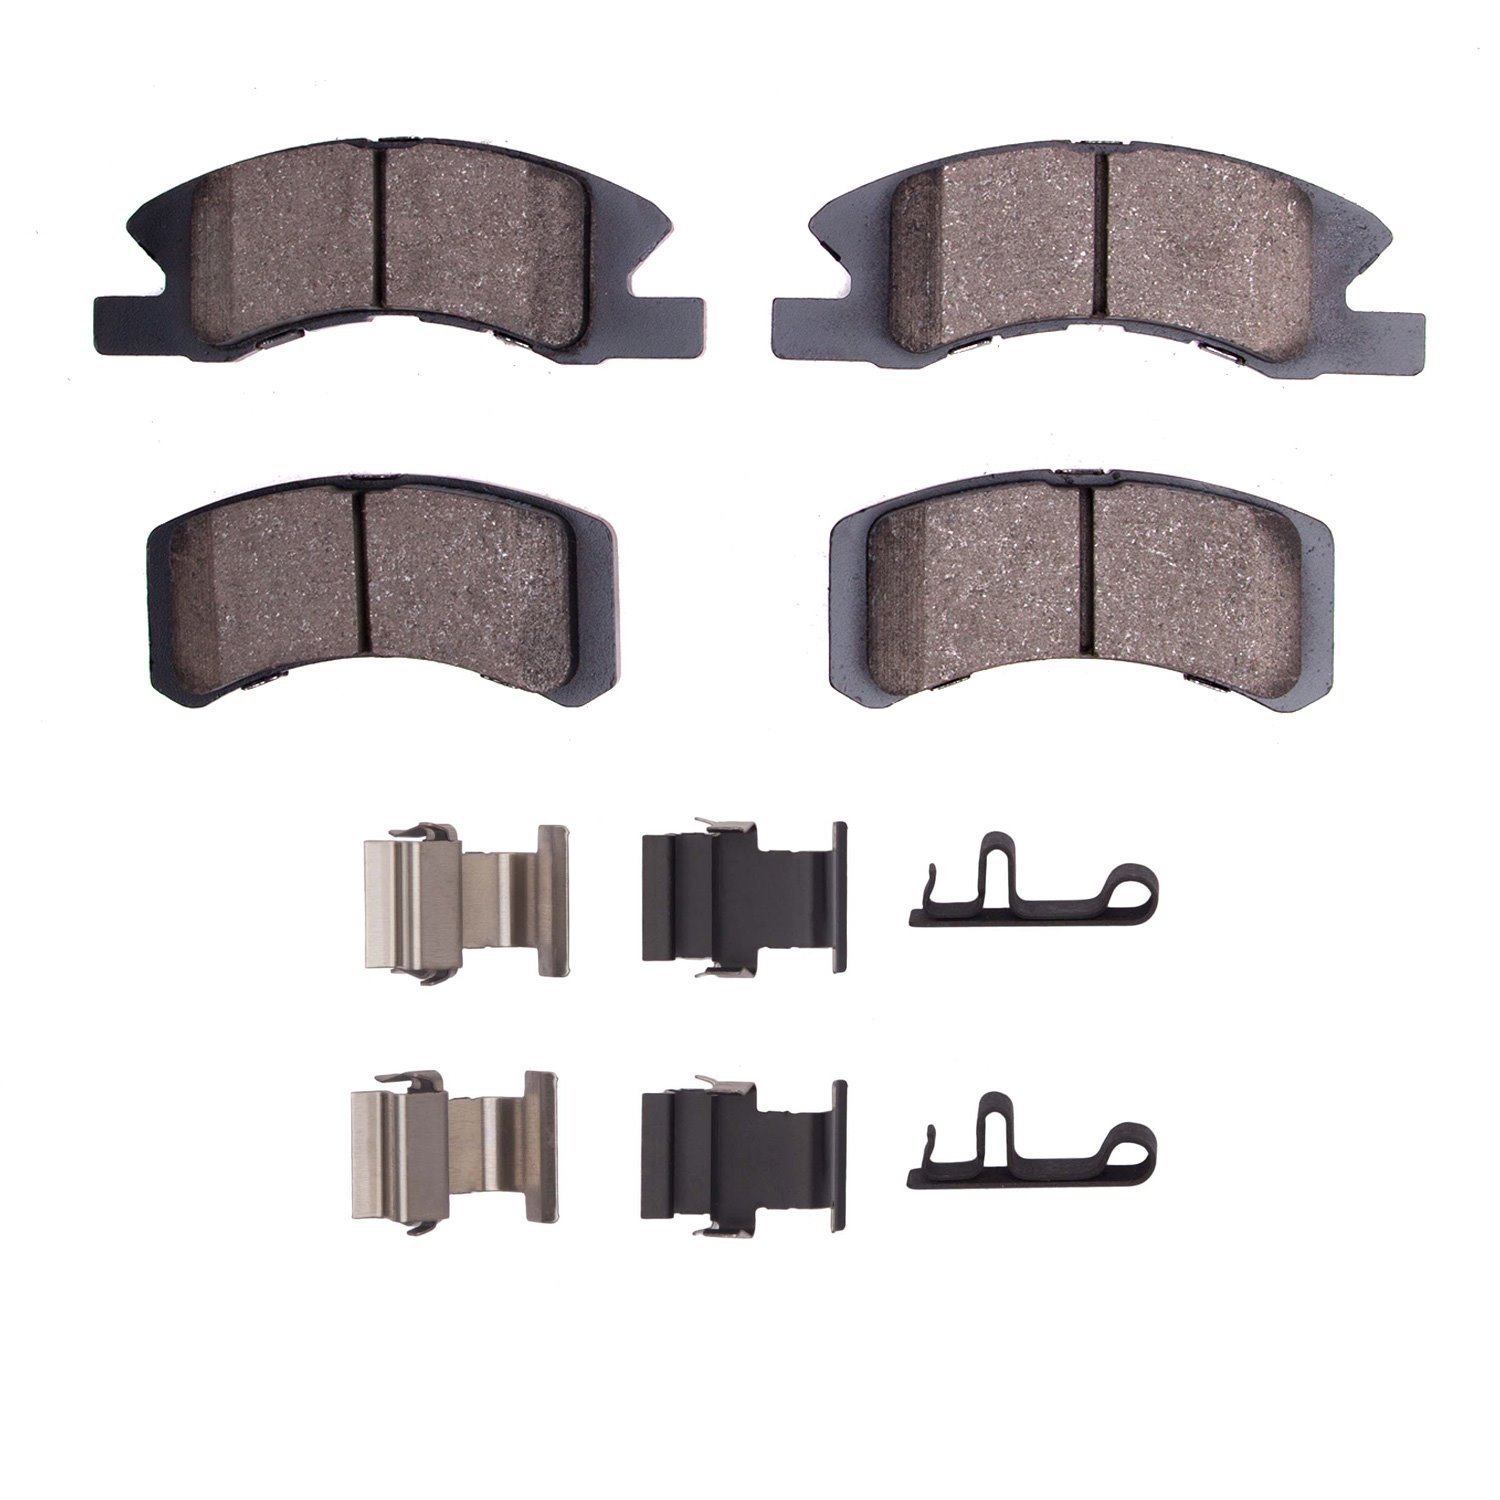 1310-1731-01 3000-Series Ceramic Brake Pads & Hardware Kit, Fits Select Multiple Makes/Models, Position: Front